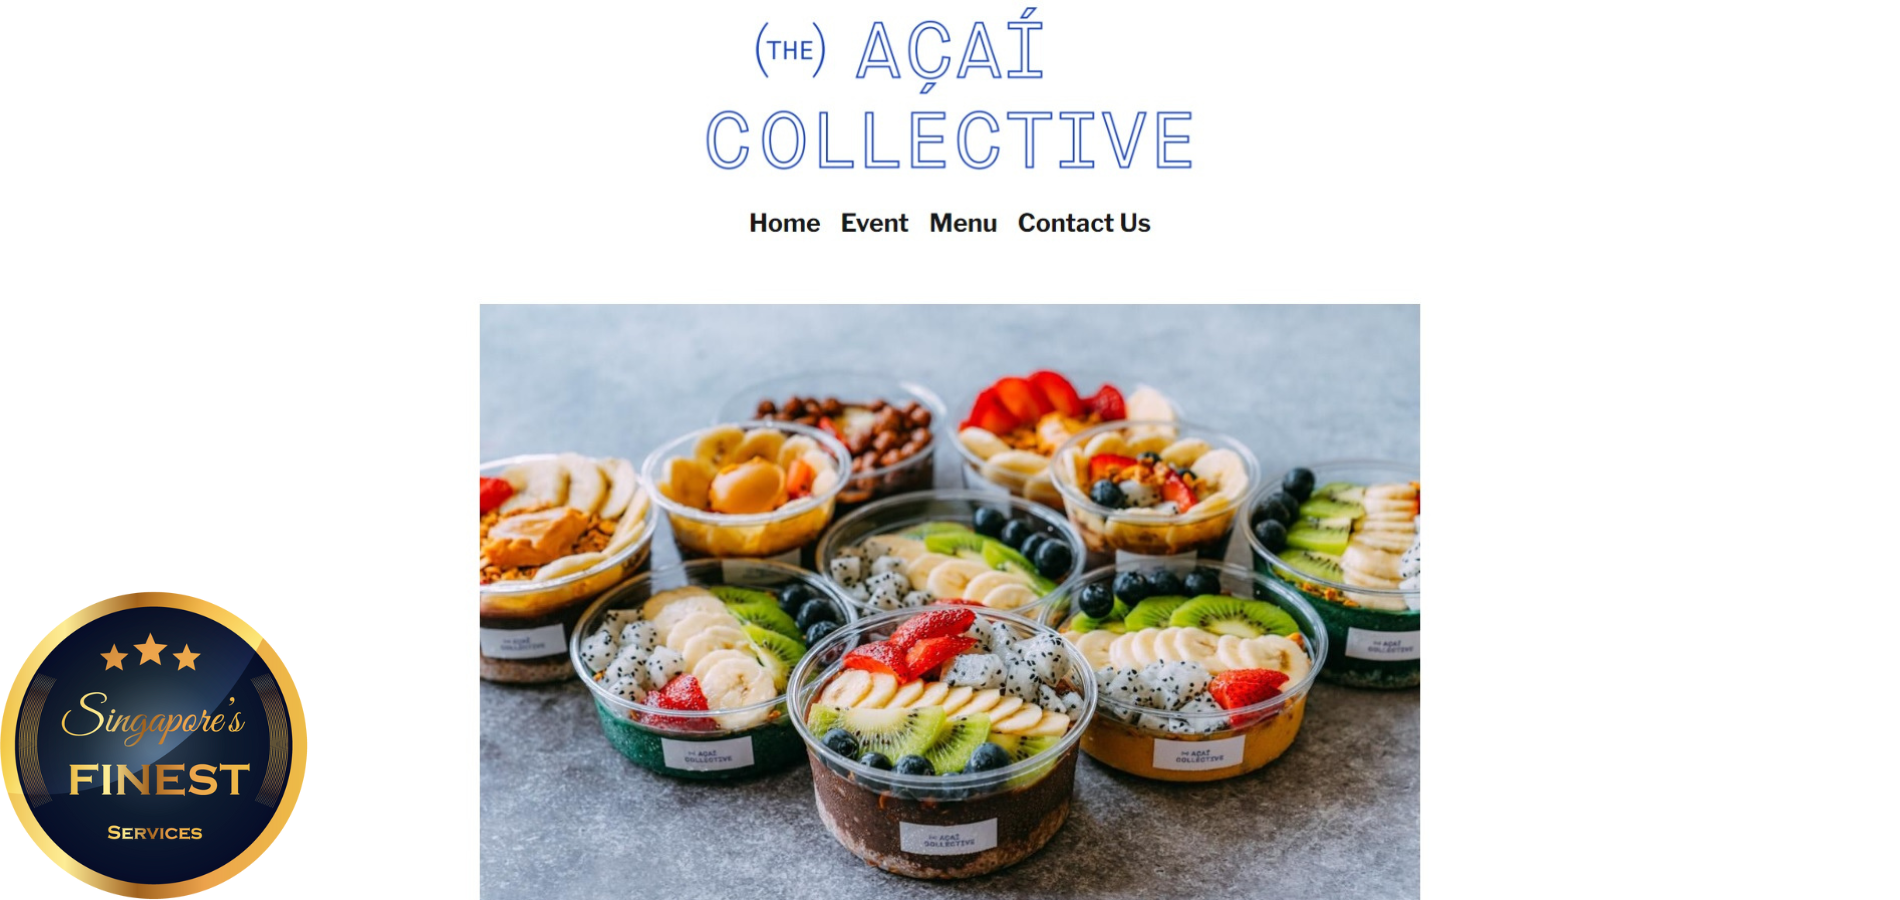 The Acai Collective - Acai Bowls Singapore